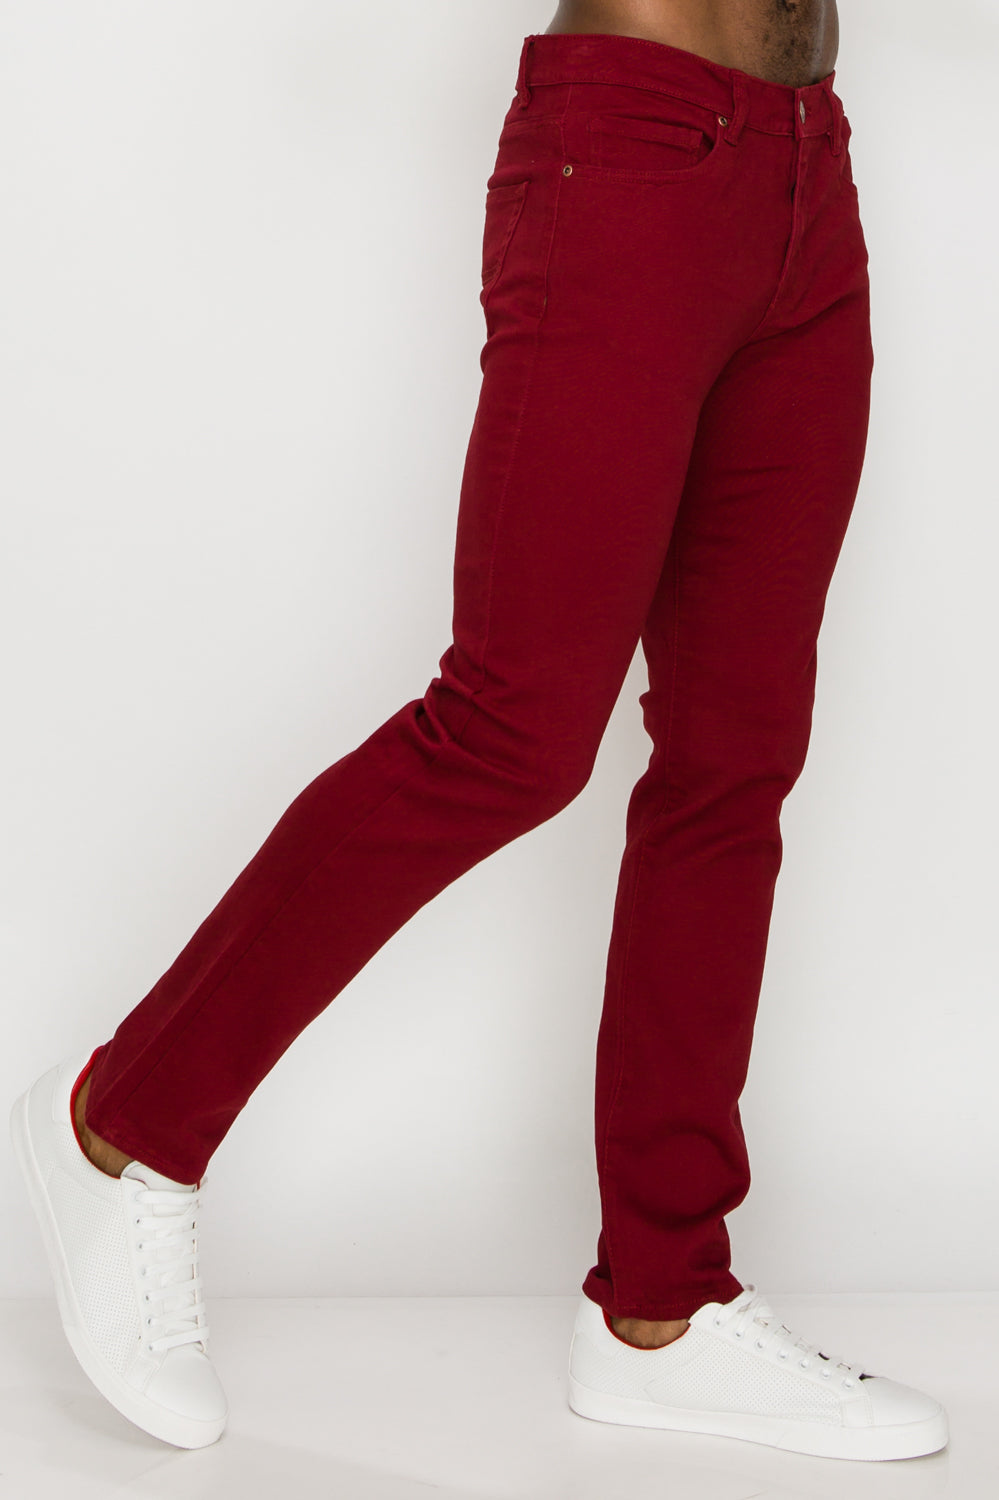 Zinovizo Men's Skinny-fit Red Wine Pants – zinovizo